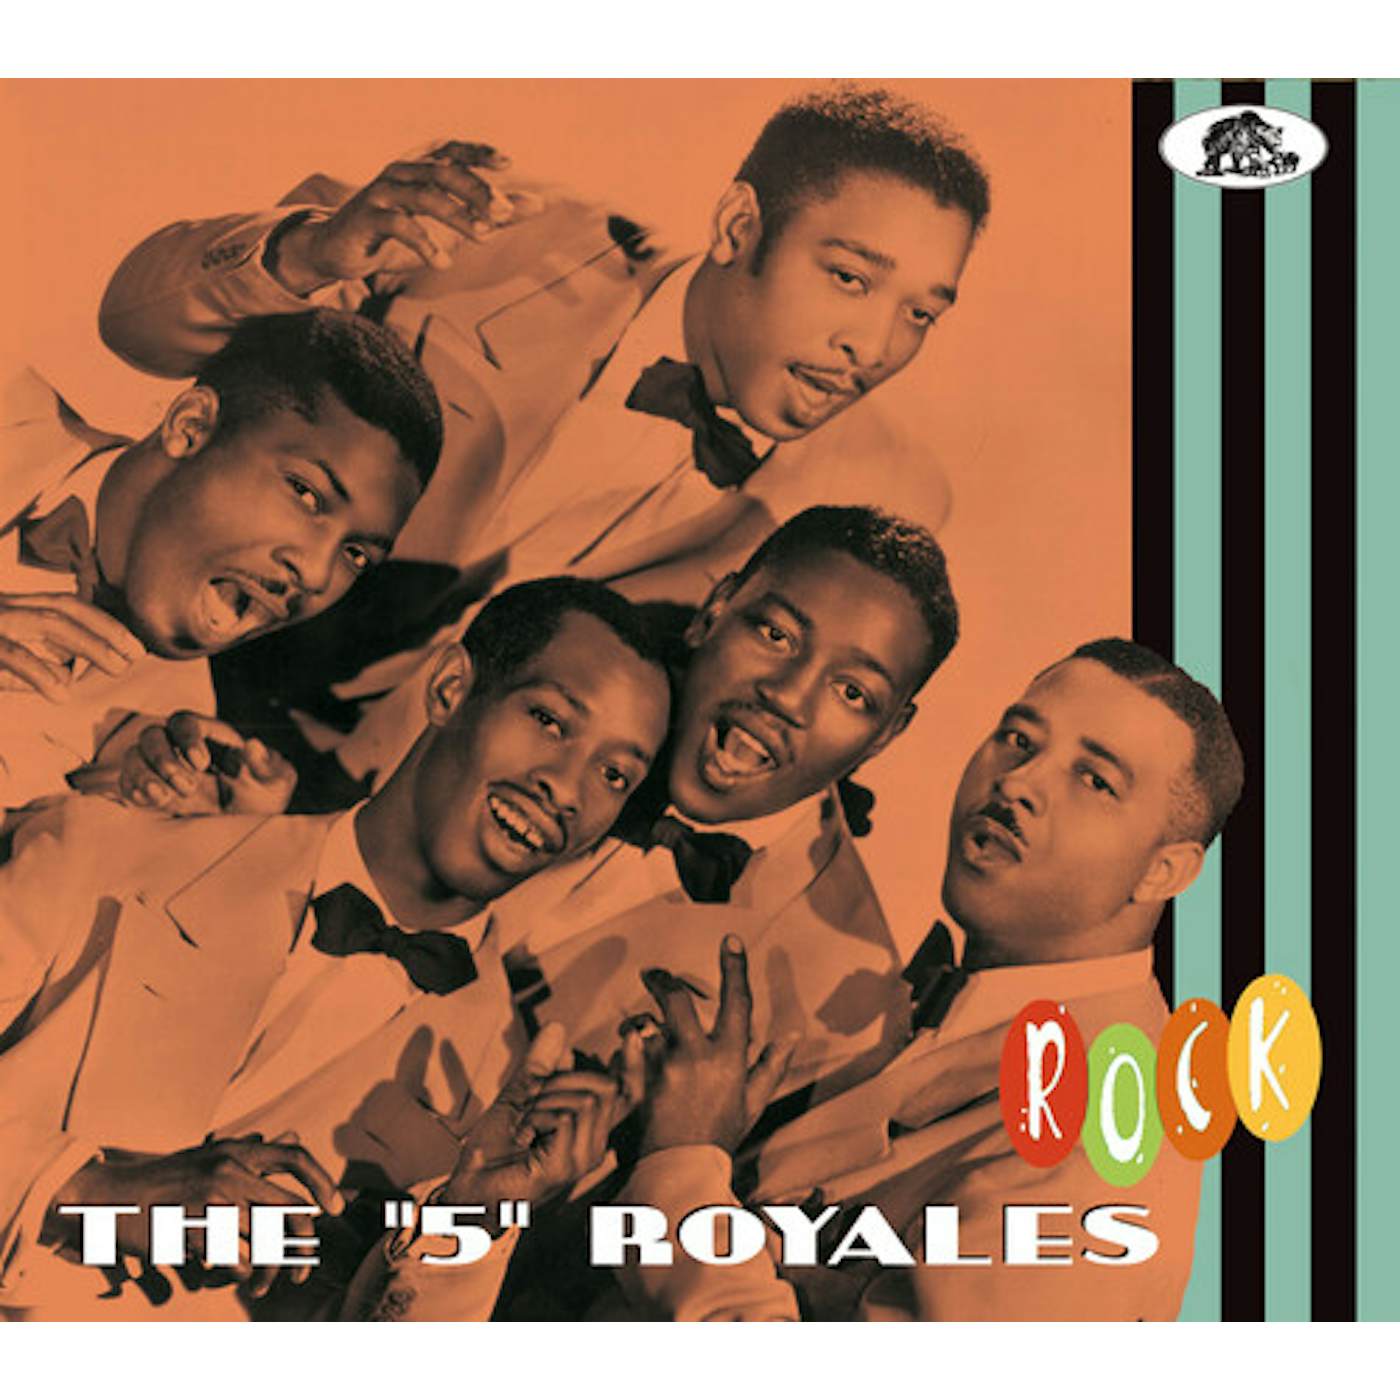 Five Royales ROCK CD